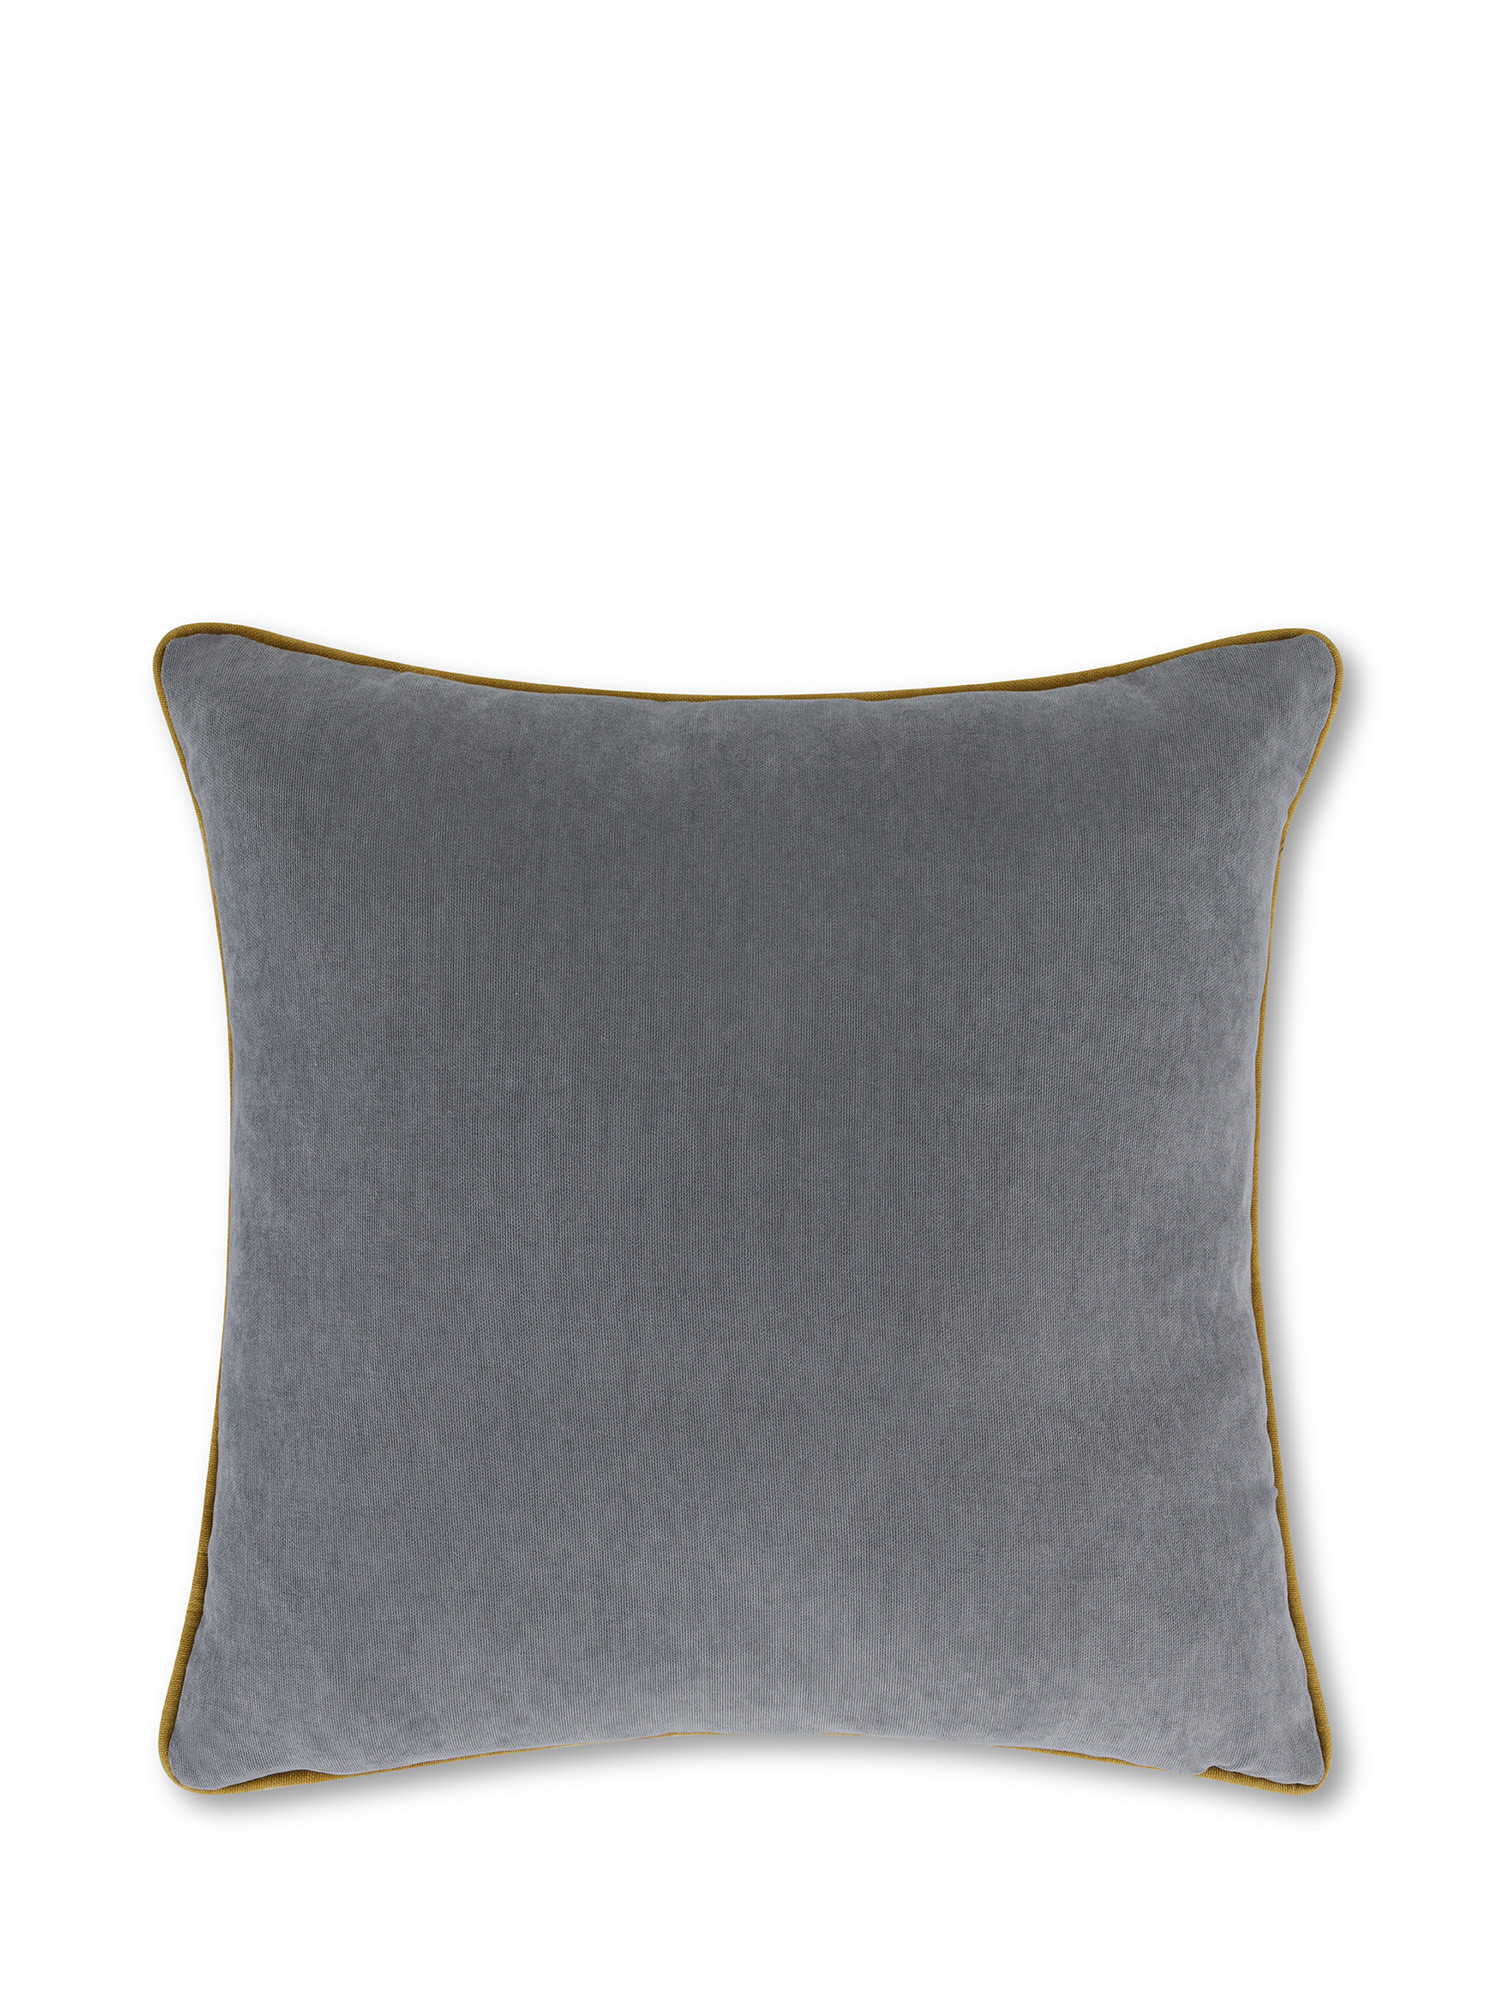 Cushion in herringbone tweed effect fabric 45x45 cm, Grey, large image number 1